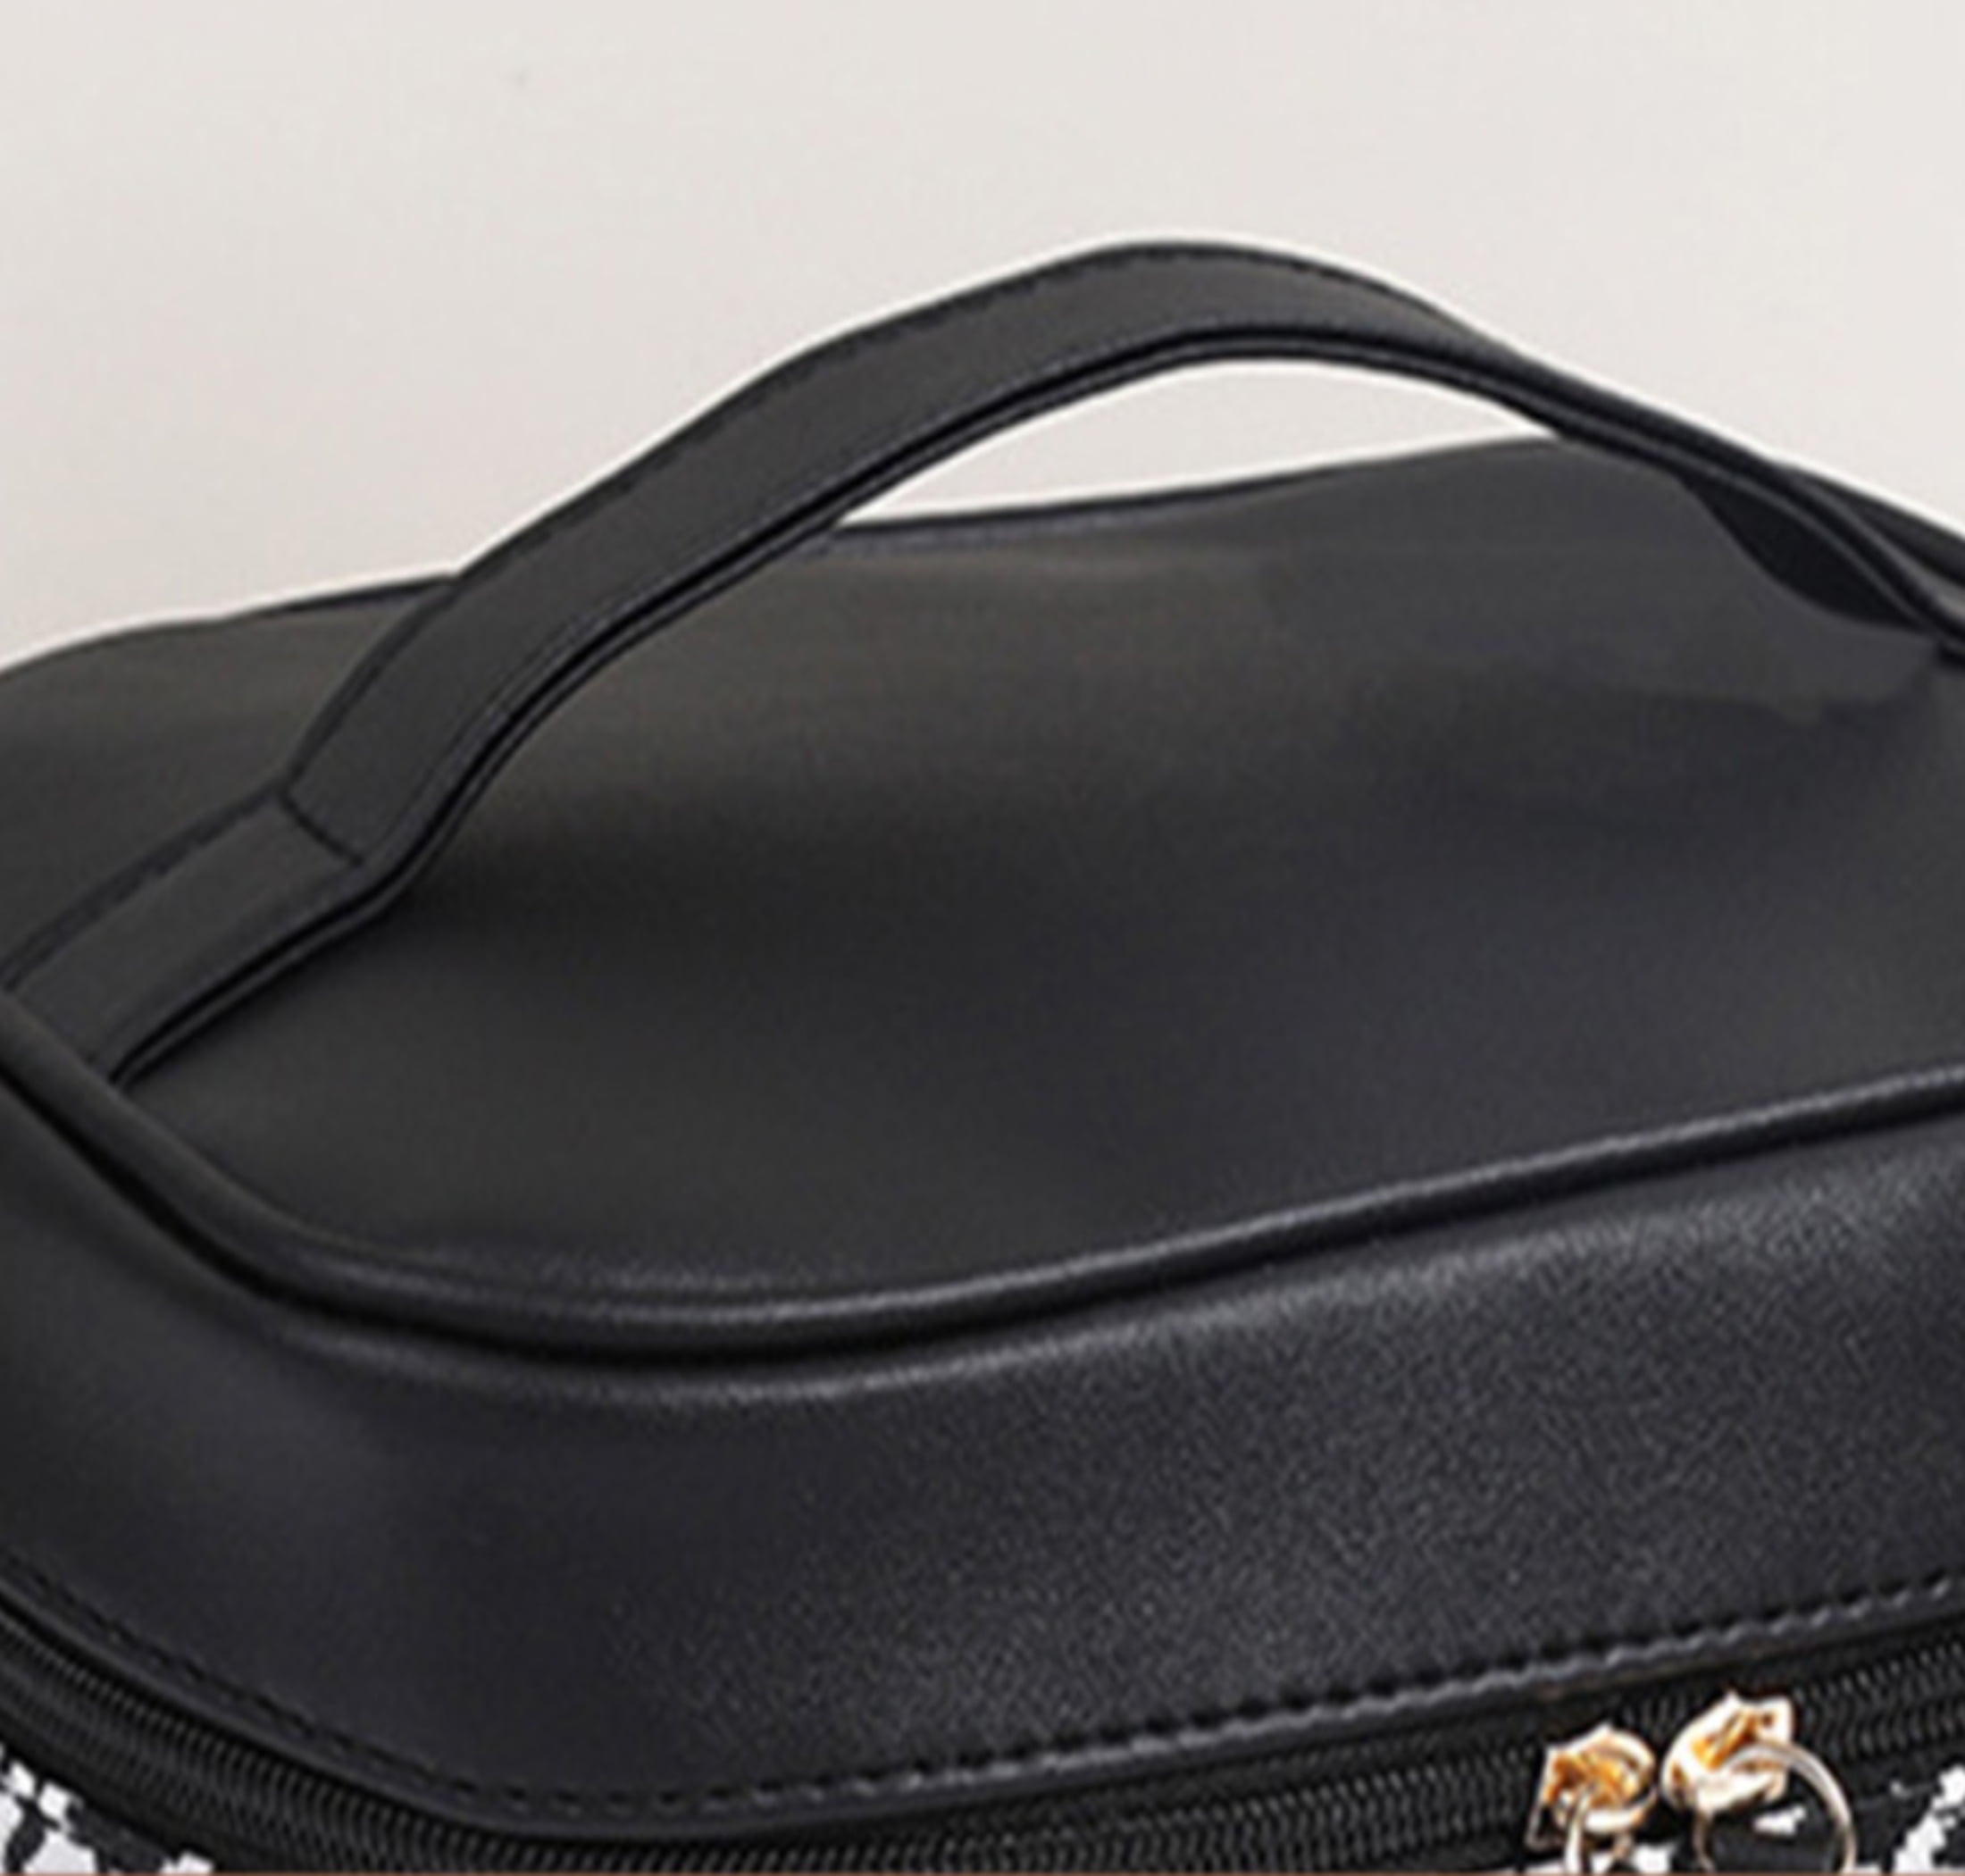 TSV Large Travel Makeup Bag with Handle, Waterproof PU Toiletry